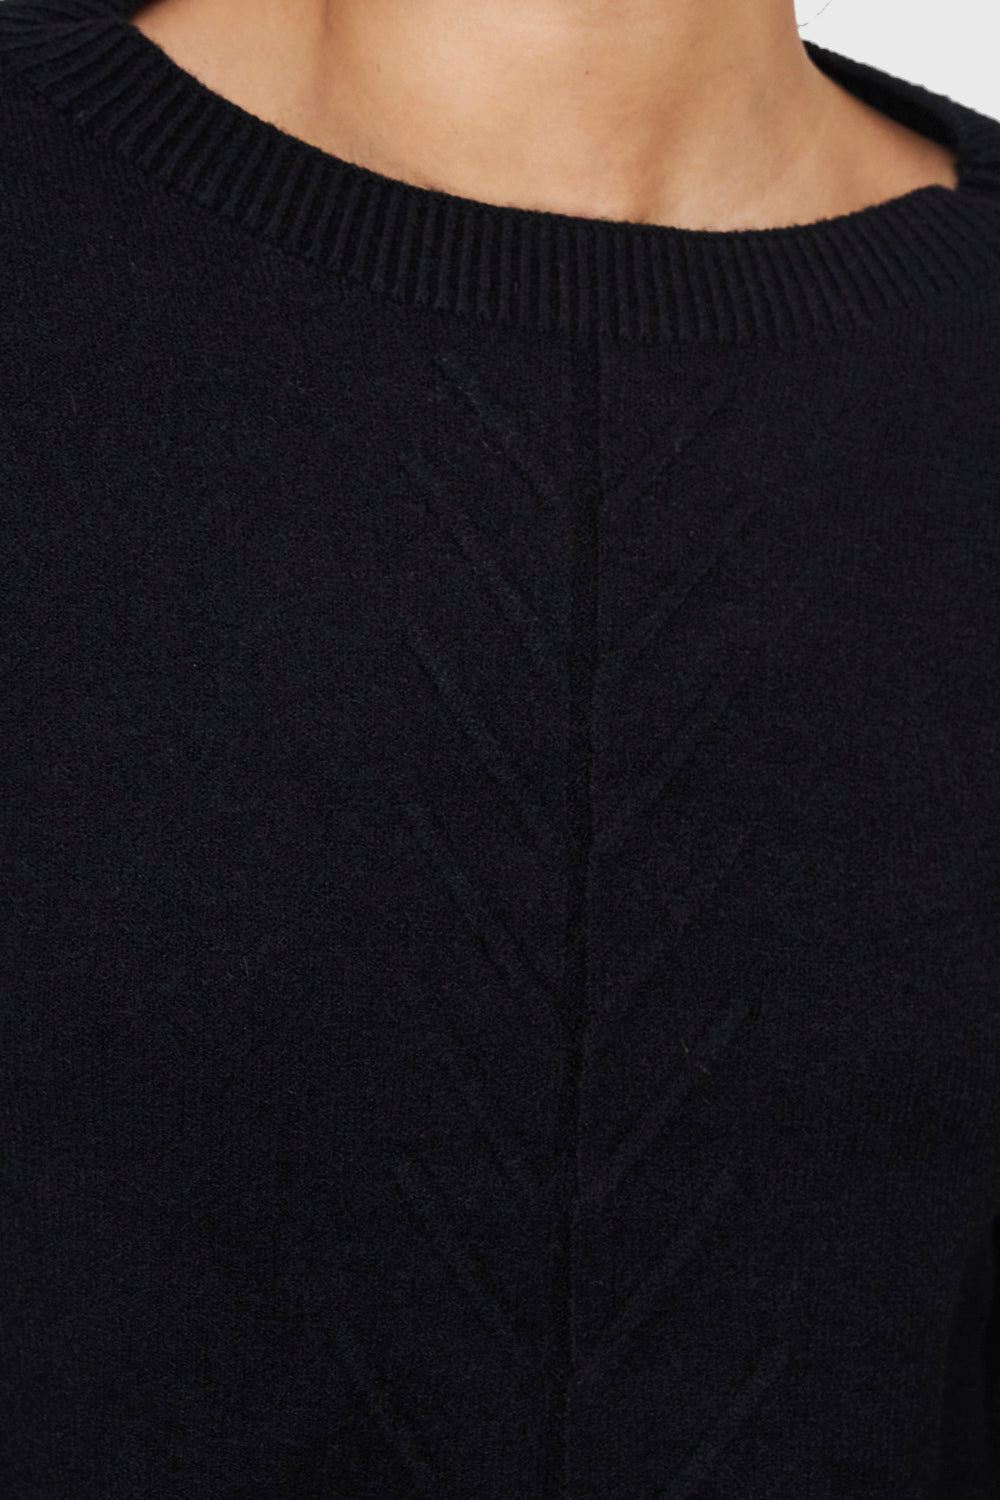 Sweater Detalles Espigas Negro